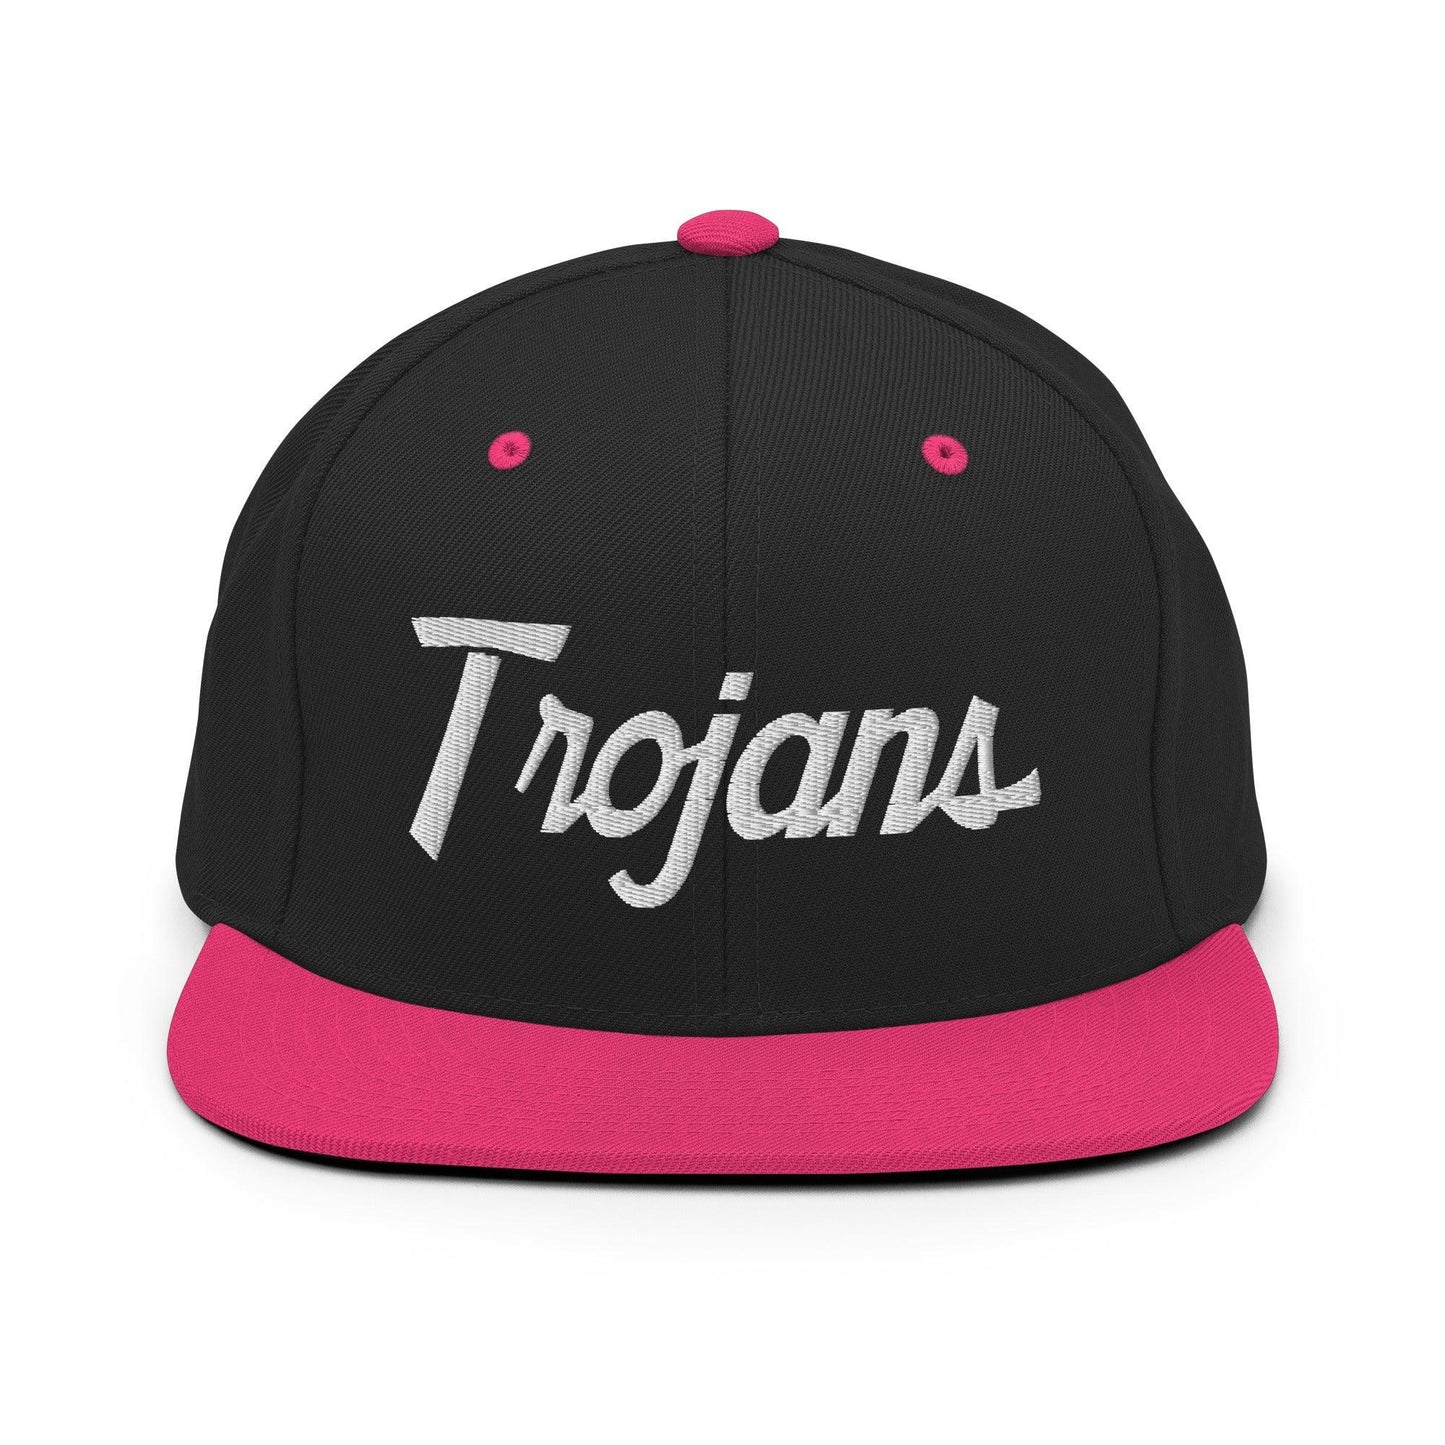 Trojans School Mascot Script Snapback Hat Black Neon Pink